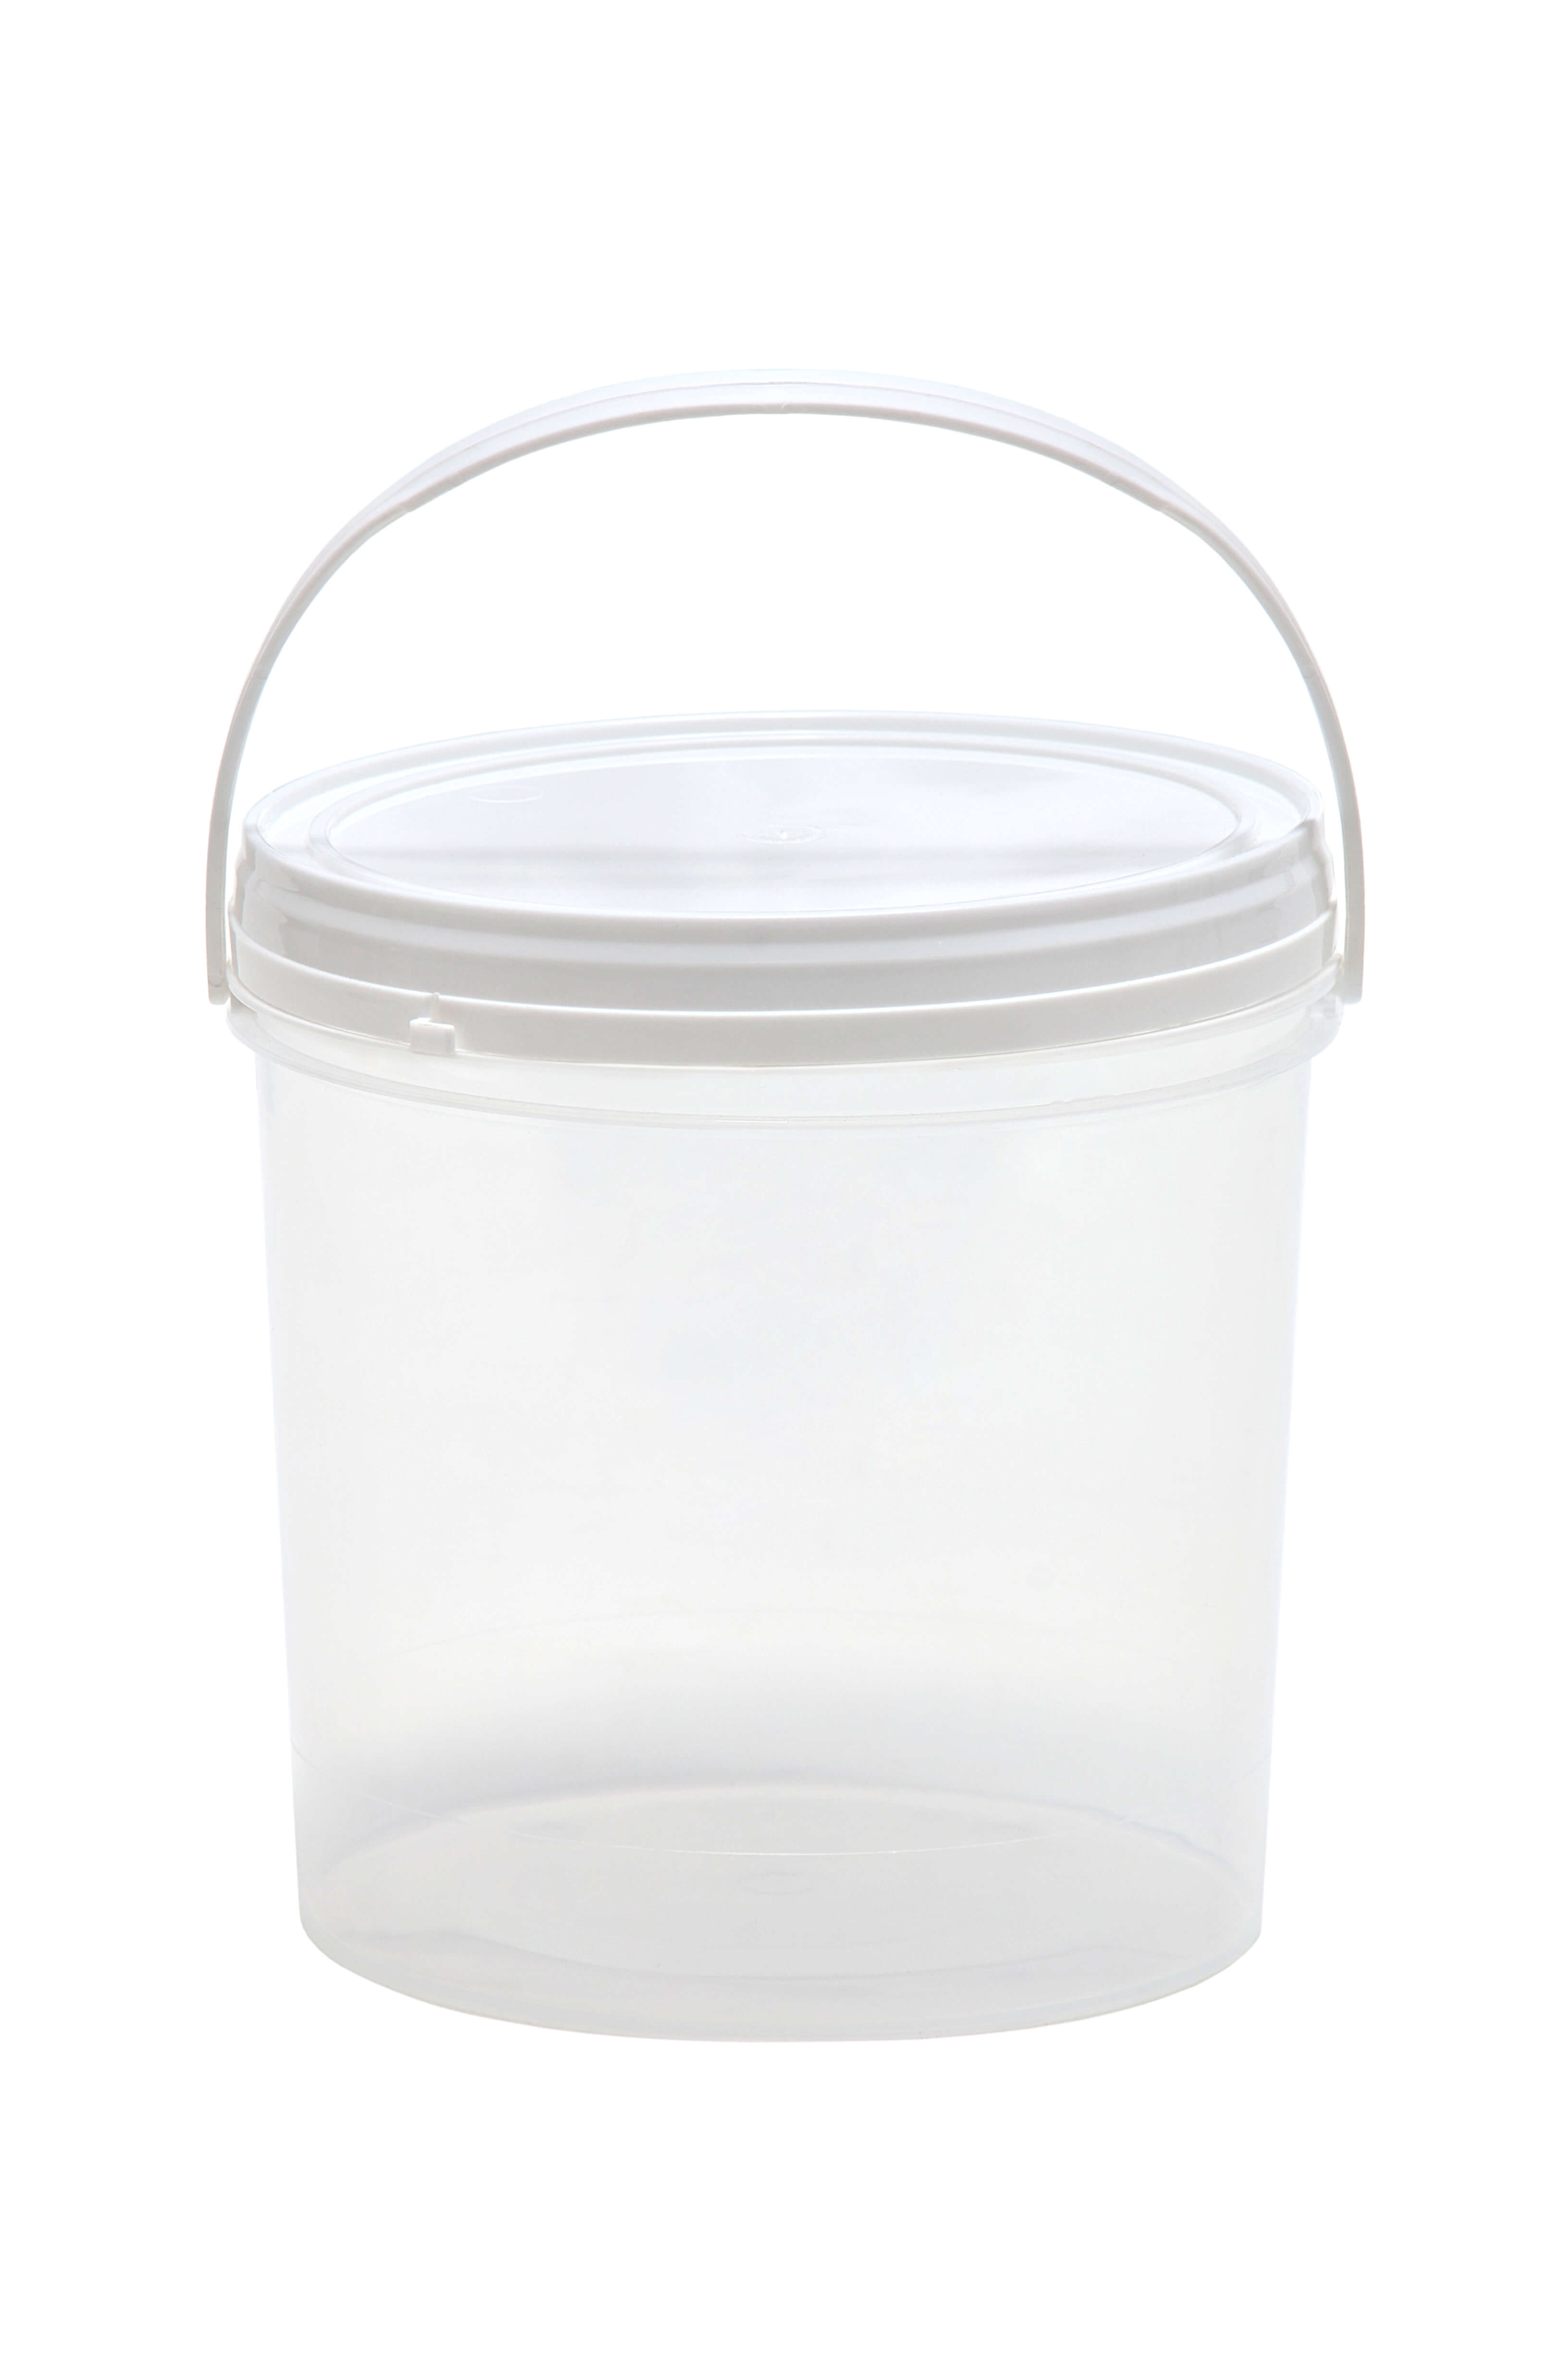 balde - 2,2l - transparente tampa e alca branca